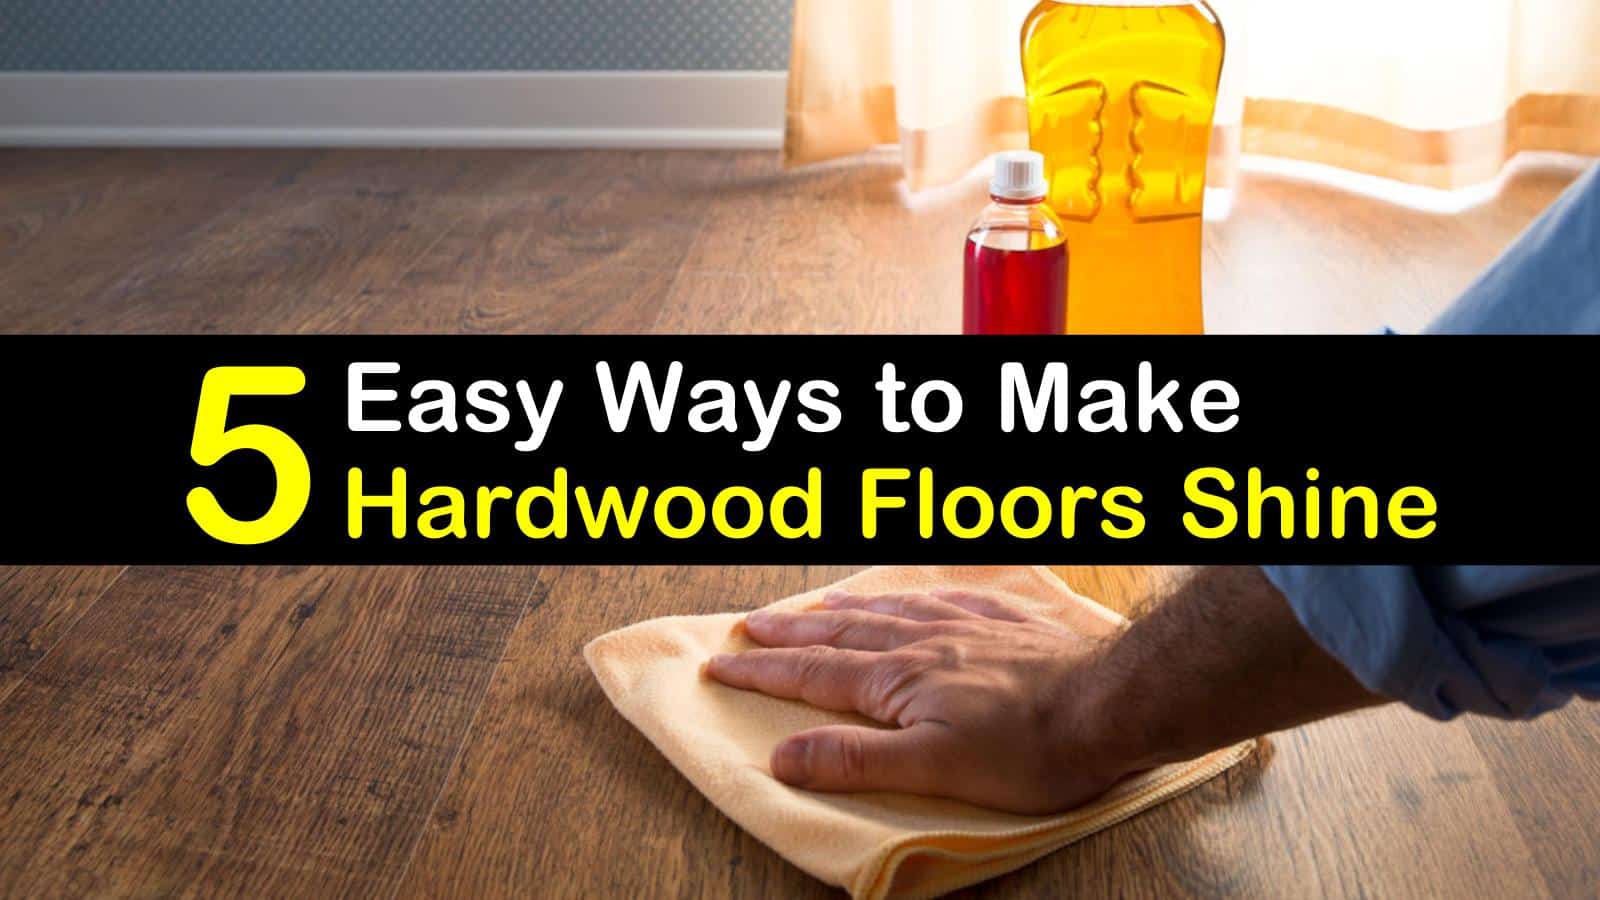 5 Easy Ways To Make Hardwood Floors Shine, Home Remedies To Make Hardwood Floors Shine